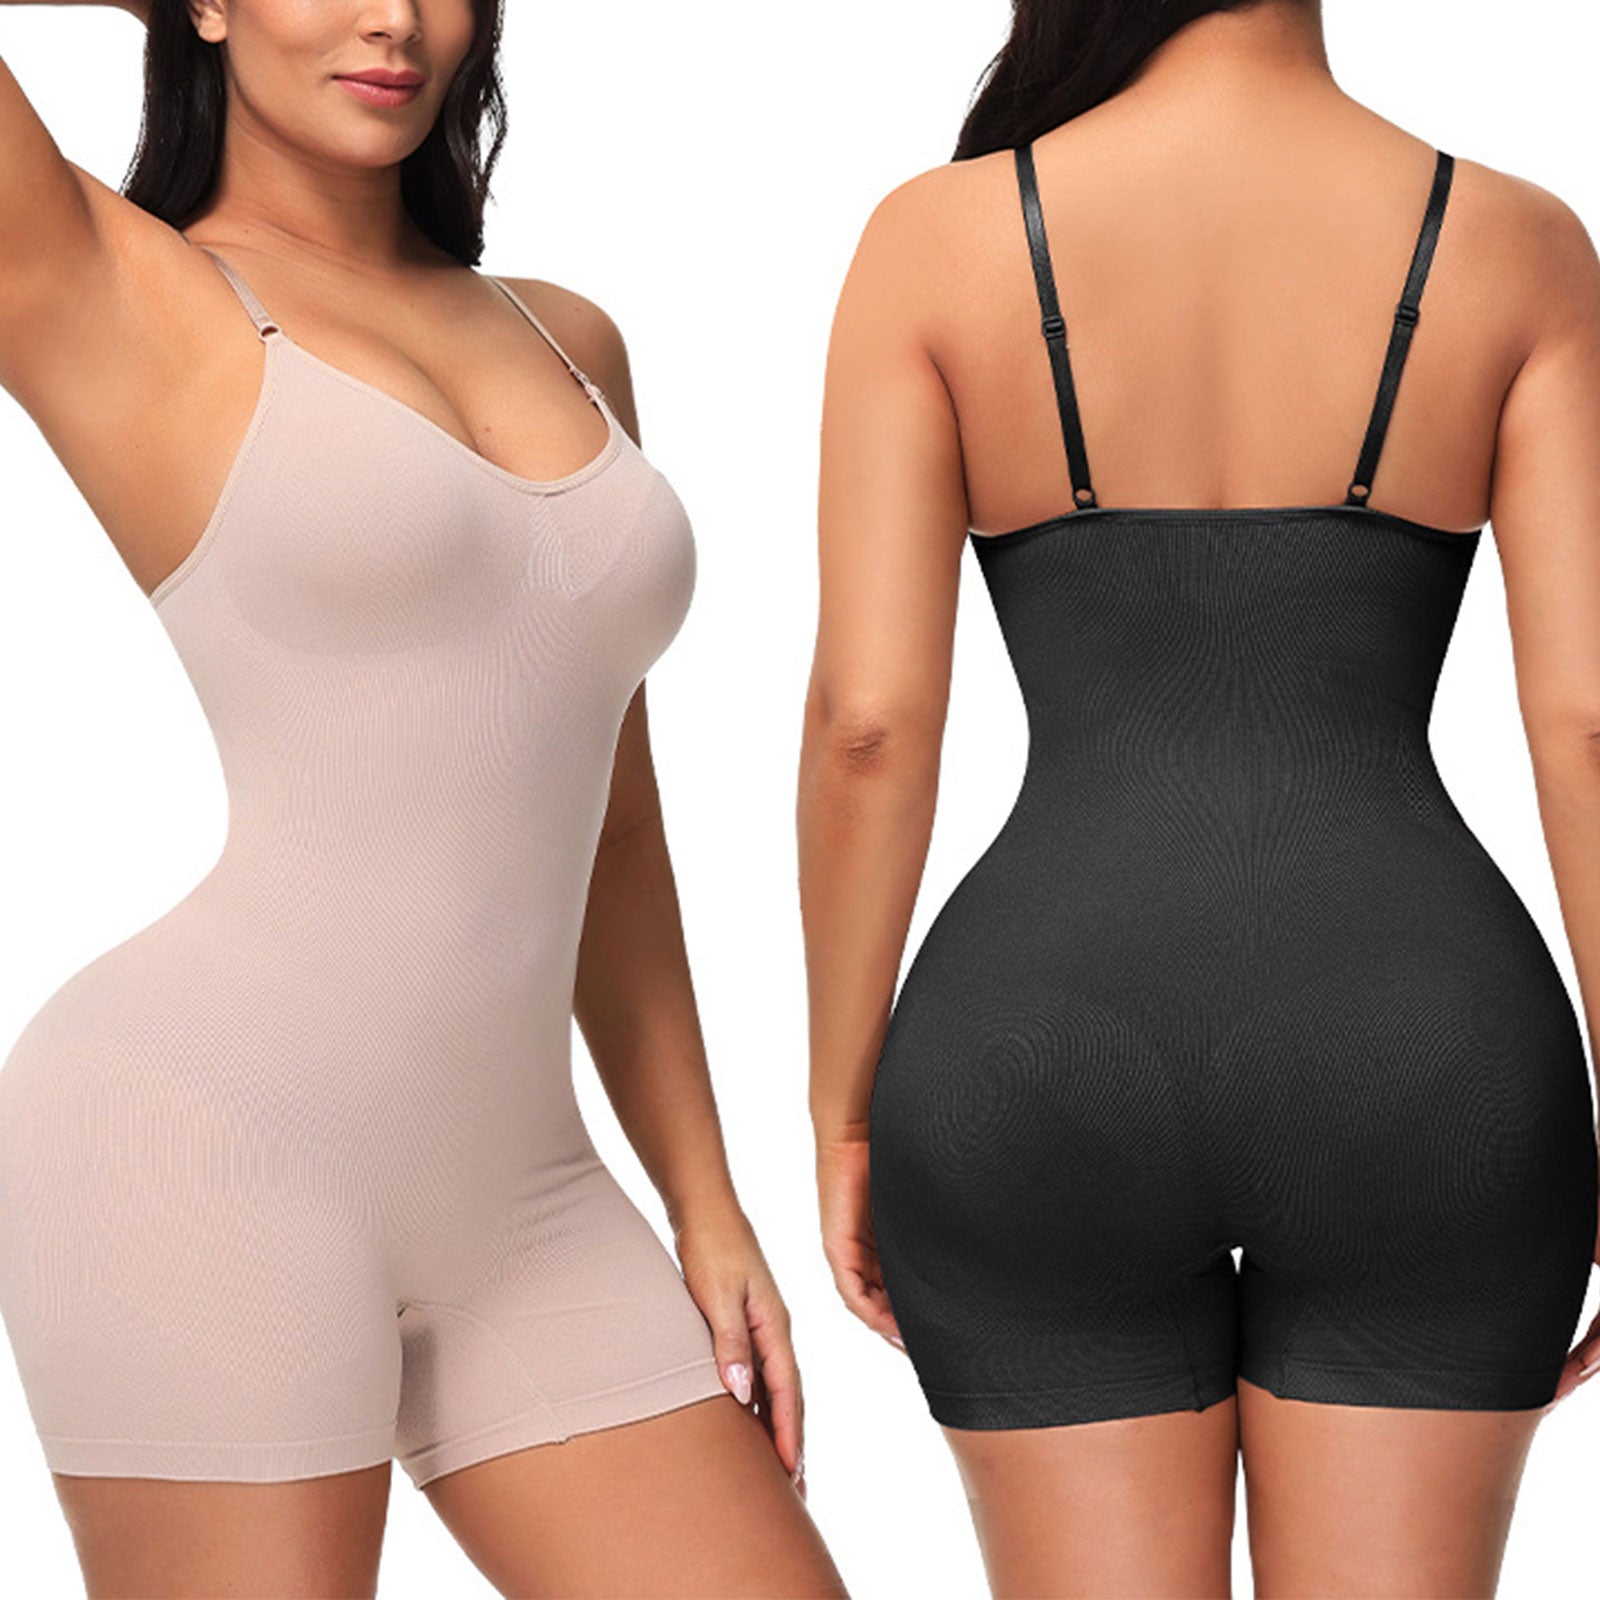 Slim tummy control Underbust bustier shapewear bodywear underwear body shaper waist trainer corset